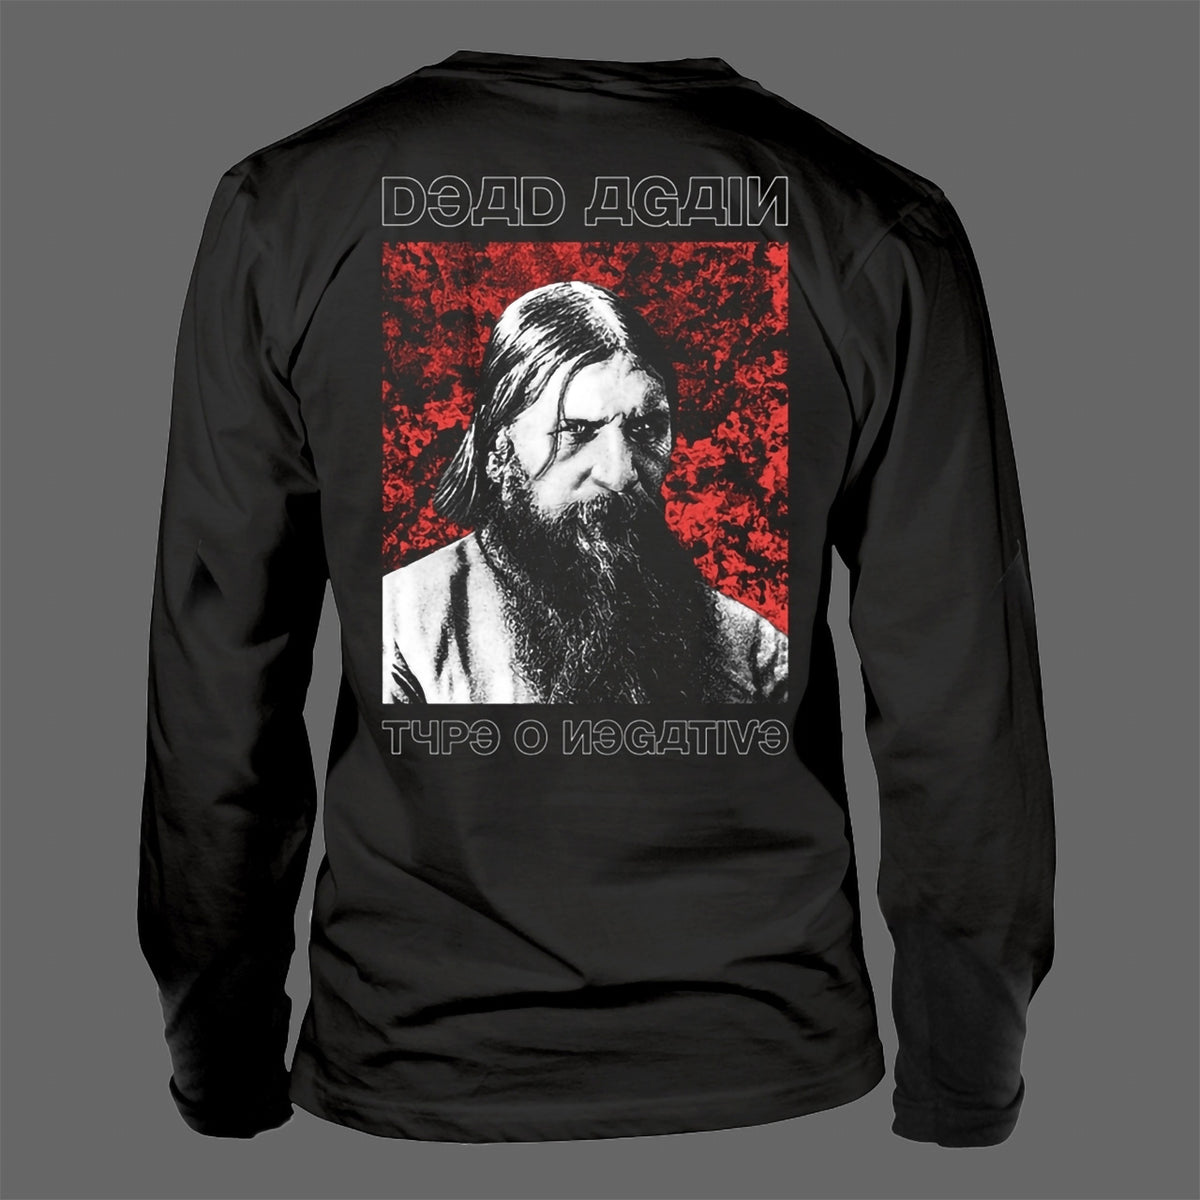 Type O Negative - Dead Again (Red Rasputin) (Long Sleeve T-Shirt